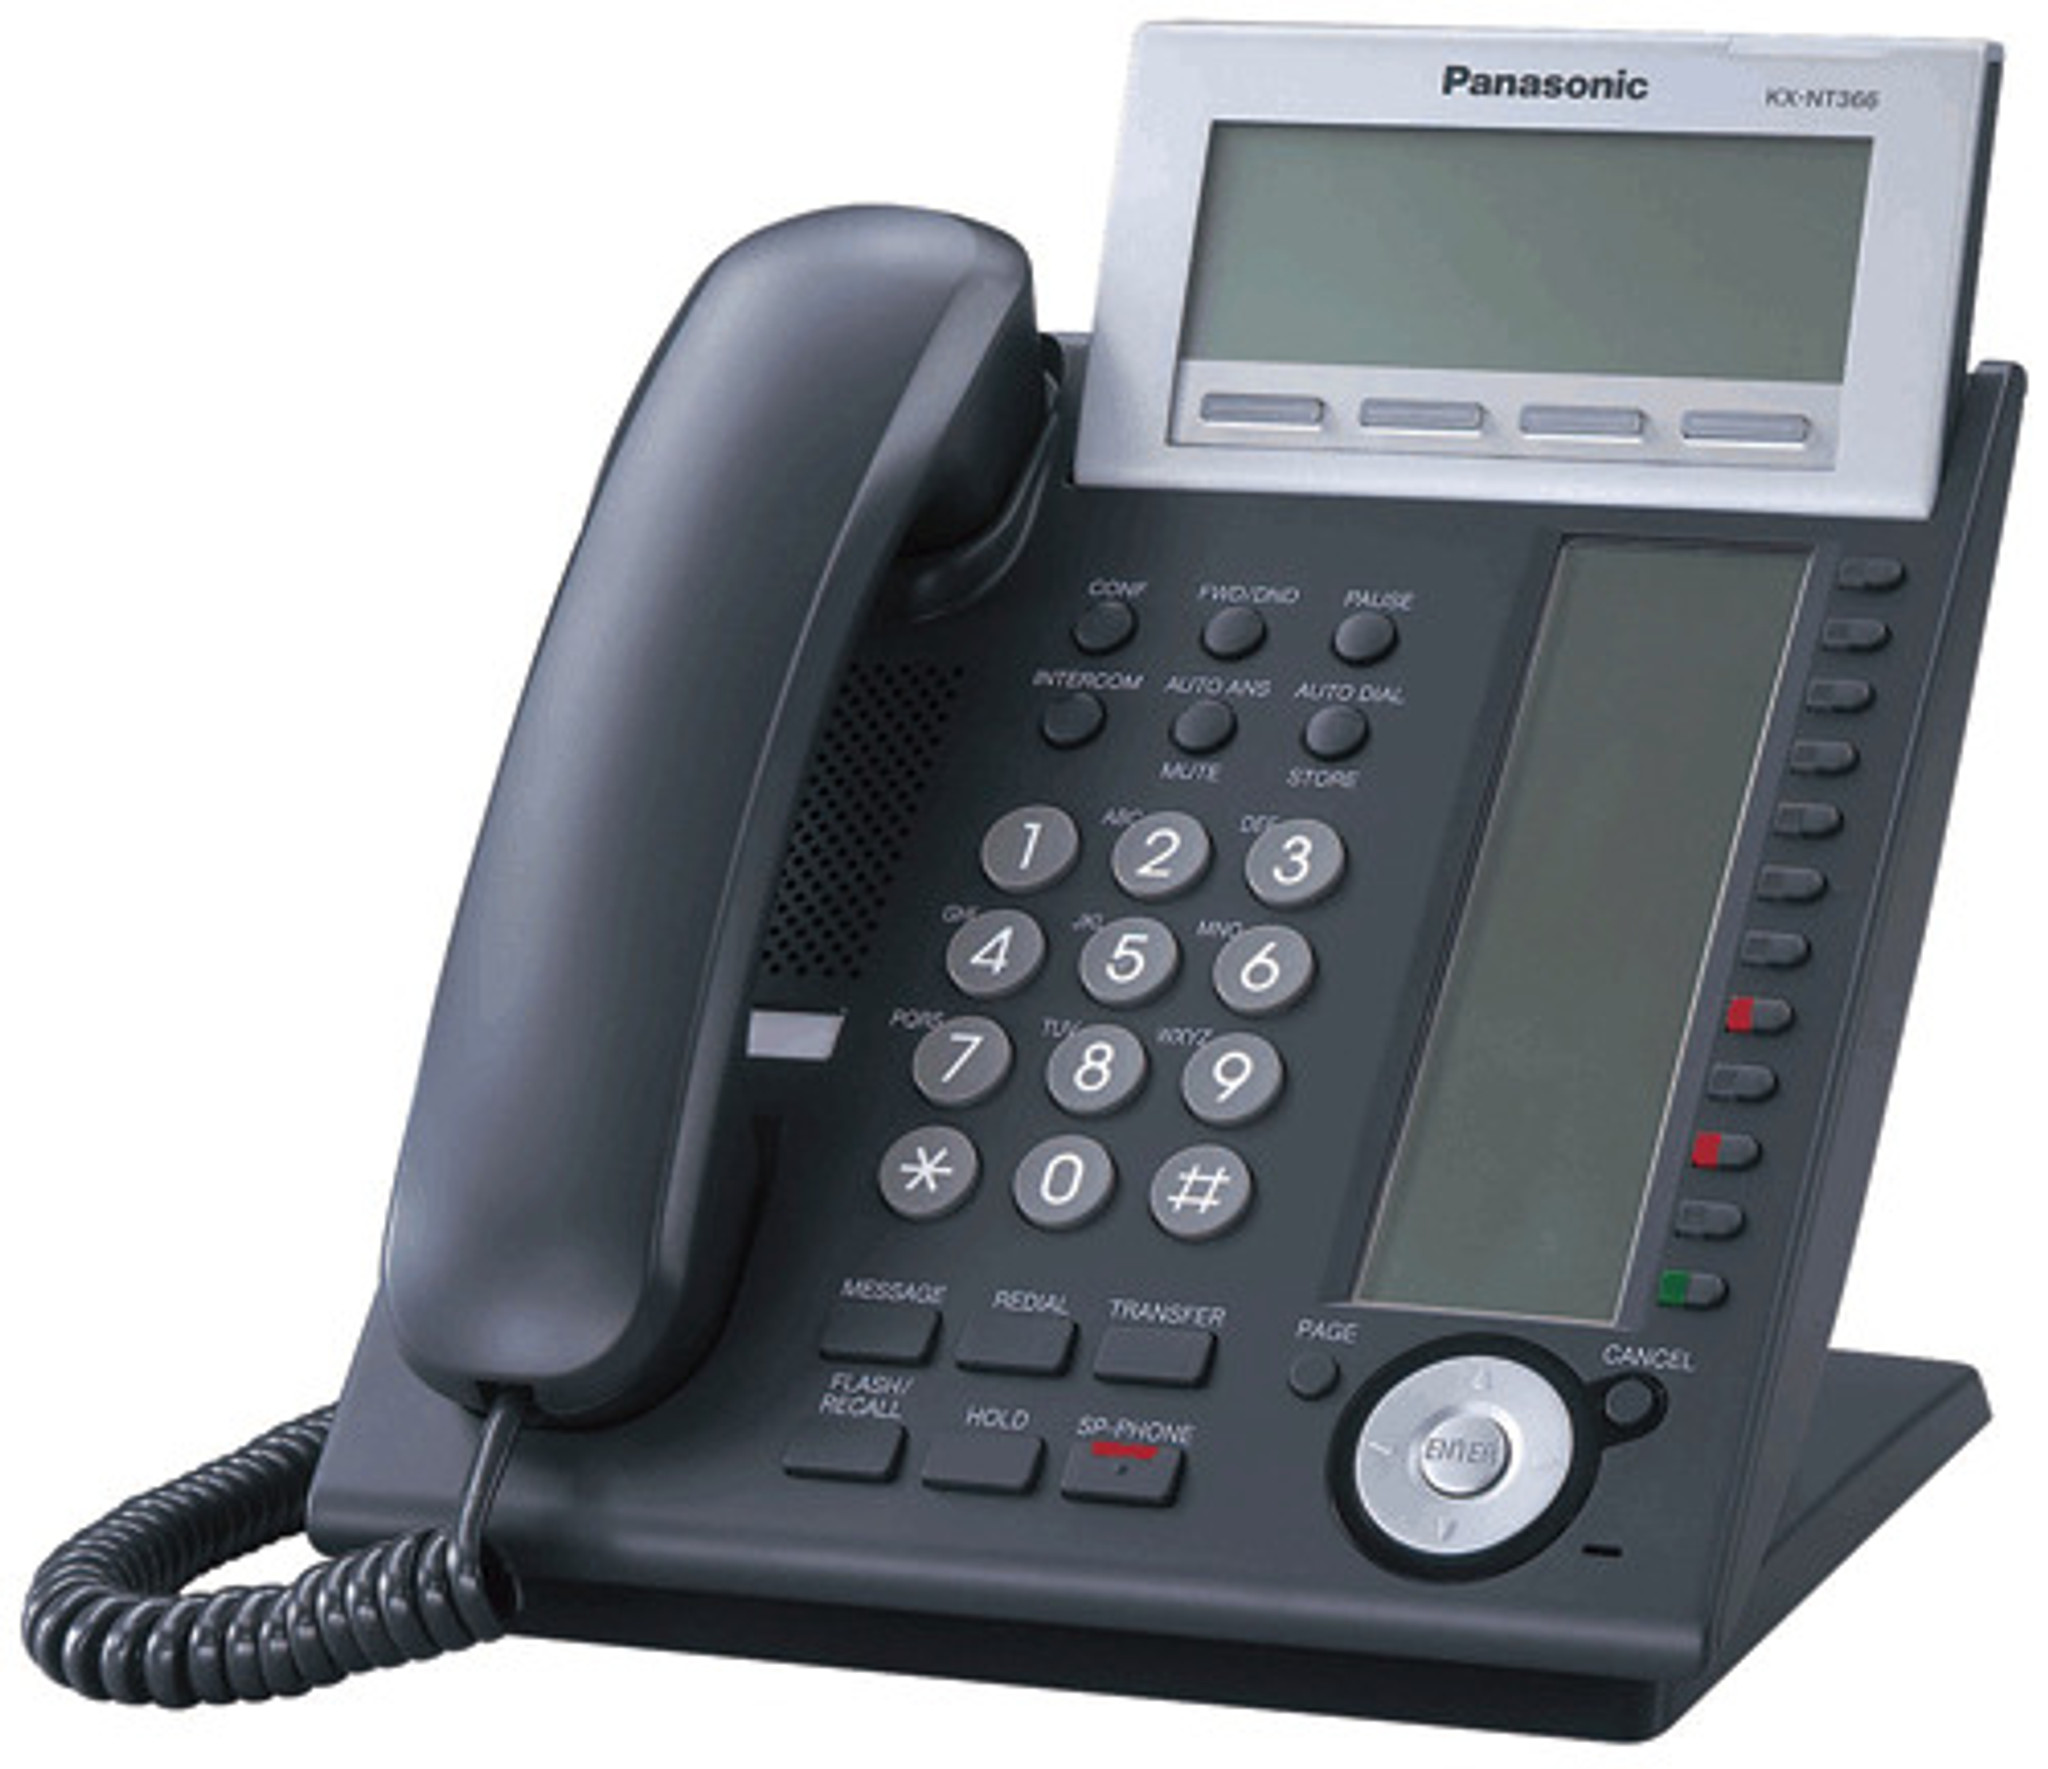 Panasonic KX-NT551X-B Standard IP Telephone with Flexible CO Buttons 1-Line Backlit LCD Display Black - 5